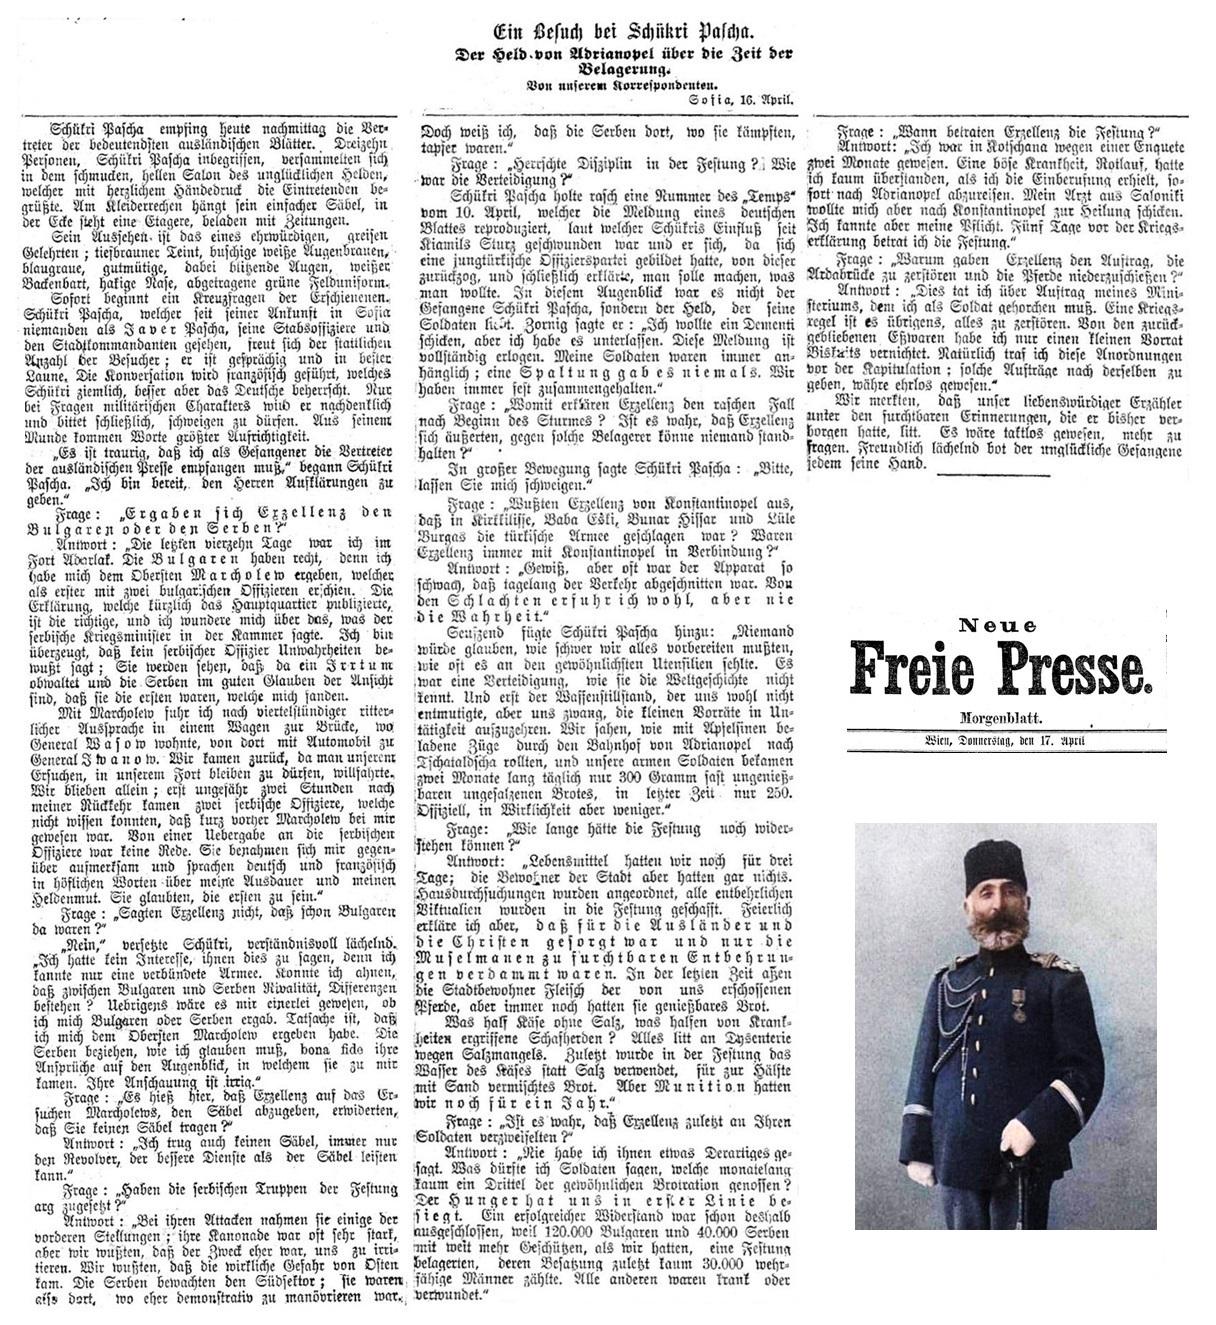 Neue Freie Presse, 17 април 1913 3.jpg